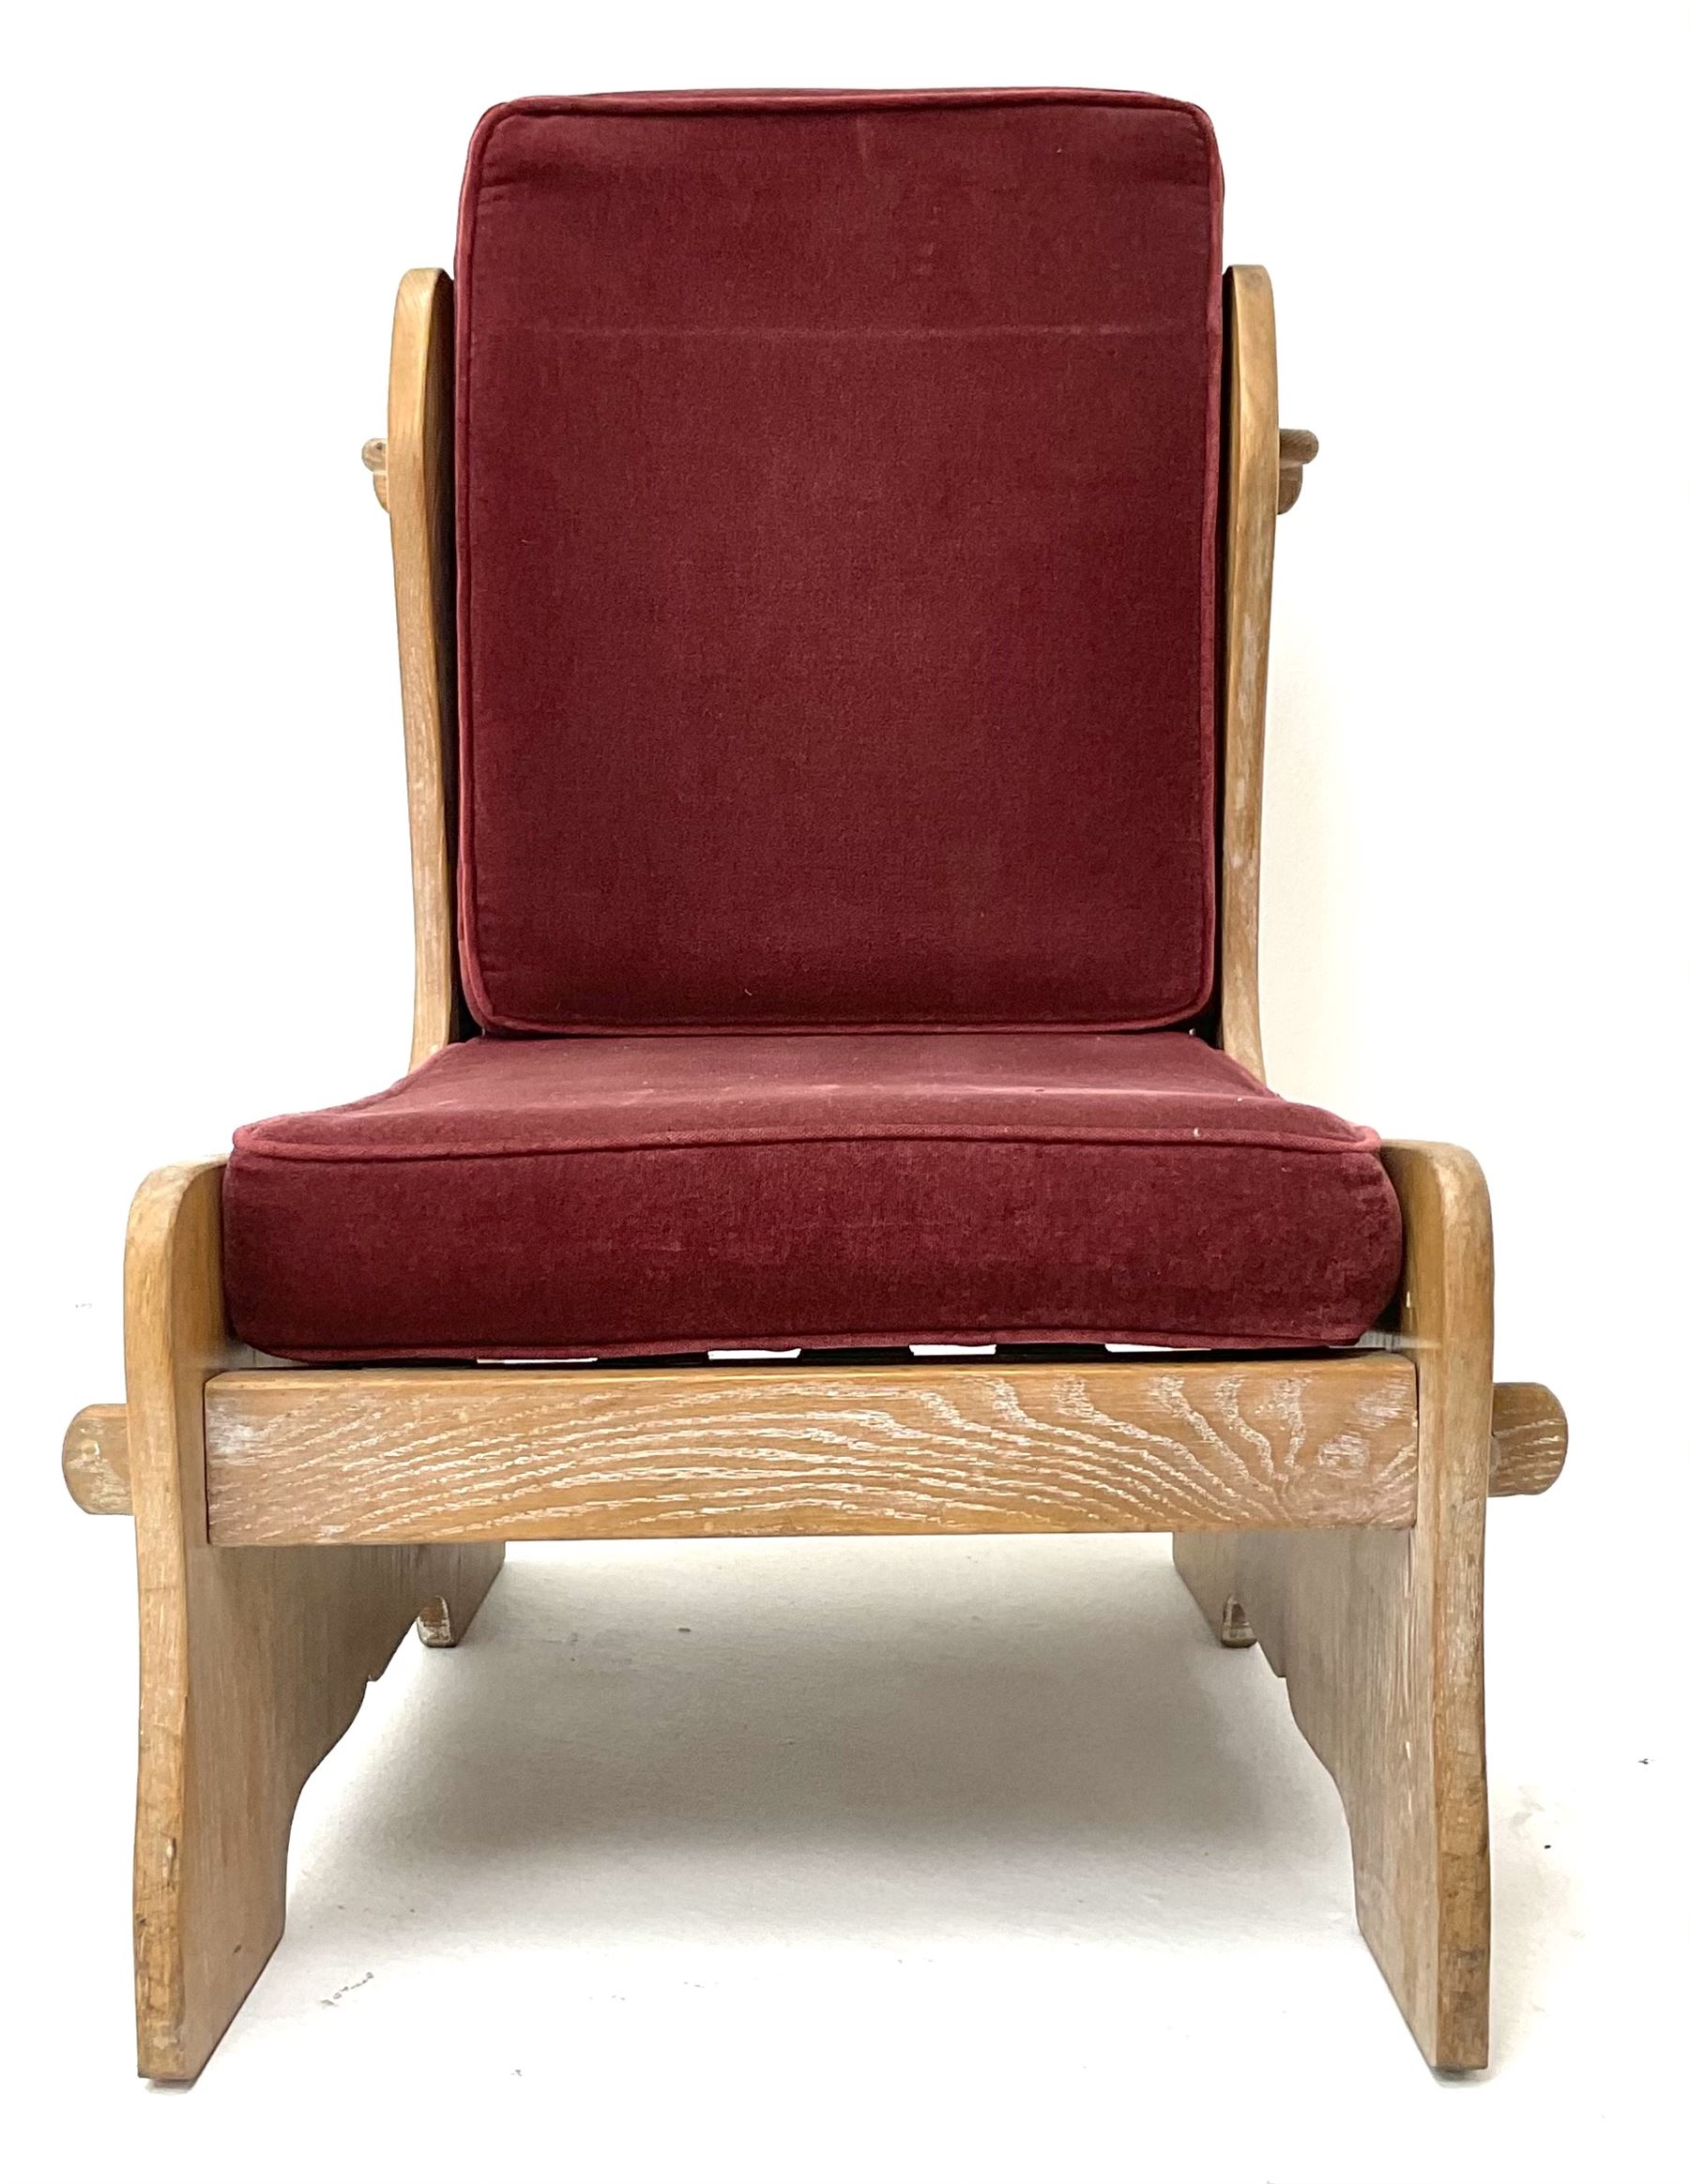 20th century oak chair